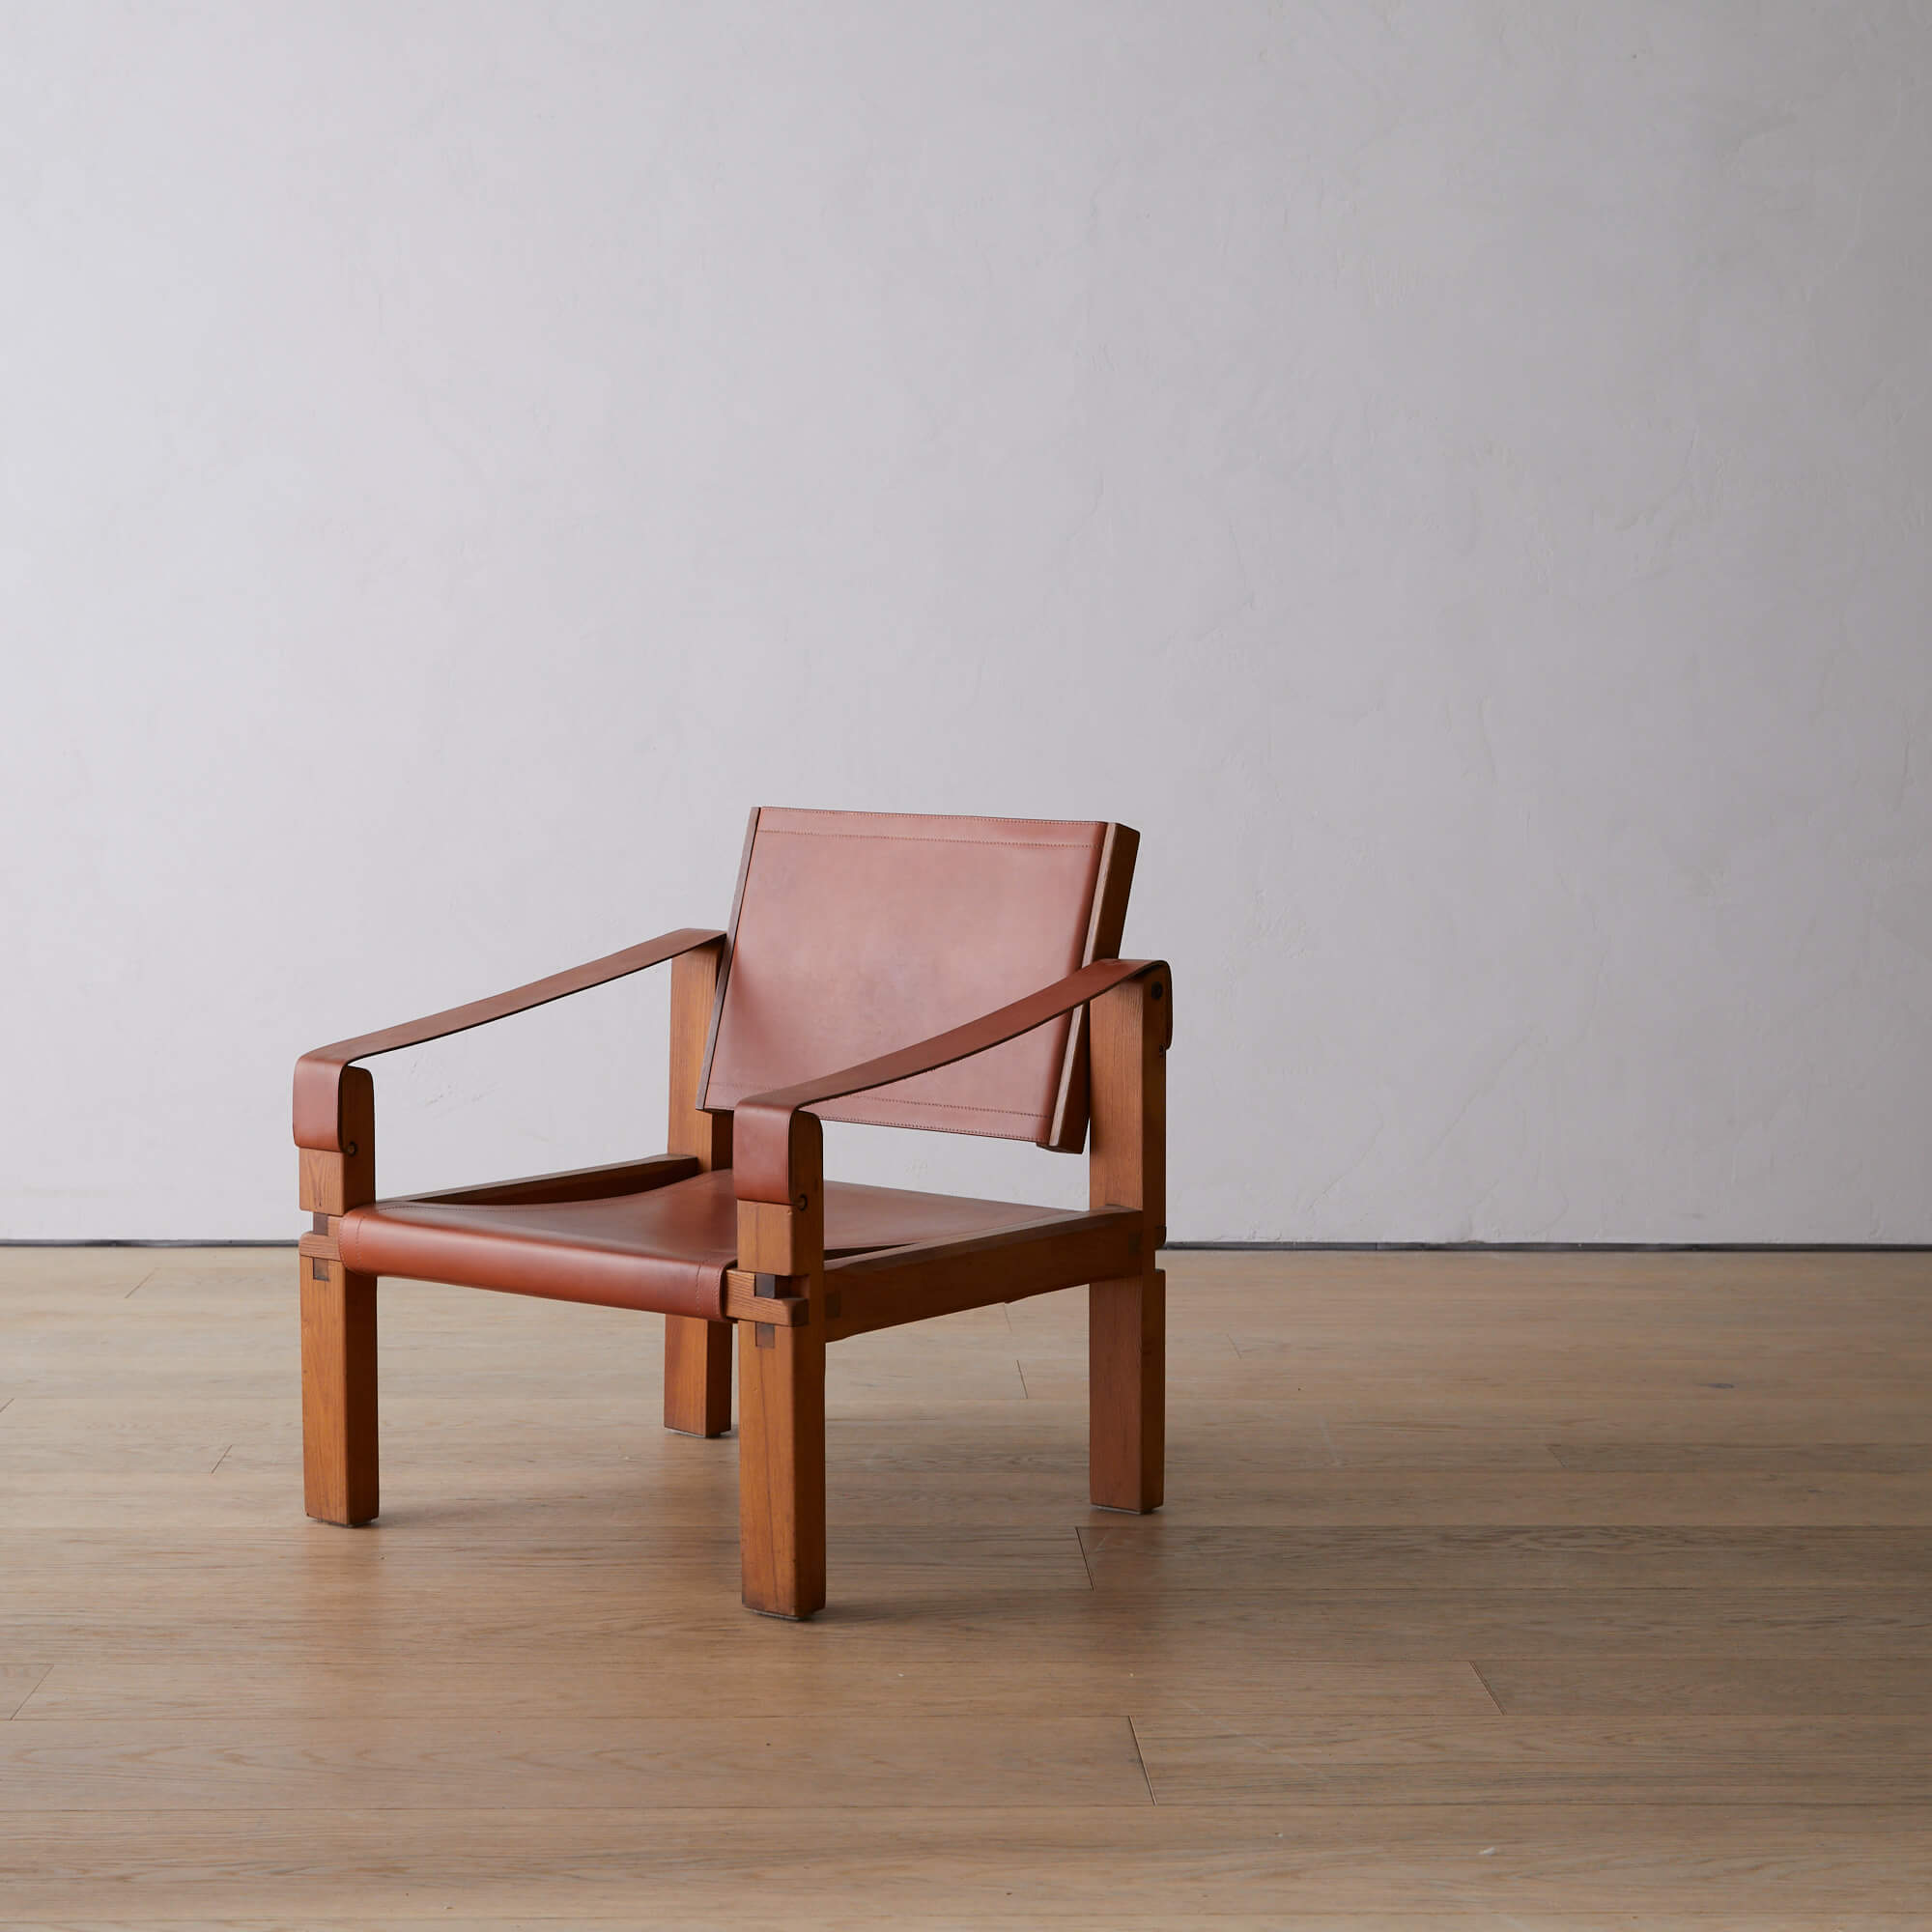 Pierre Chapo S10 "Sahara" Chair